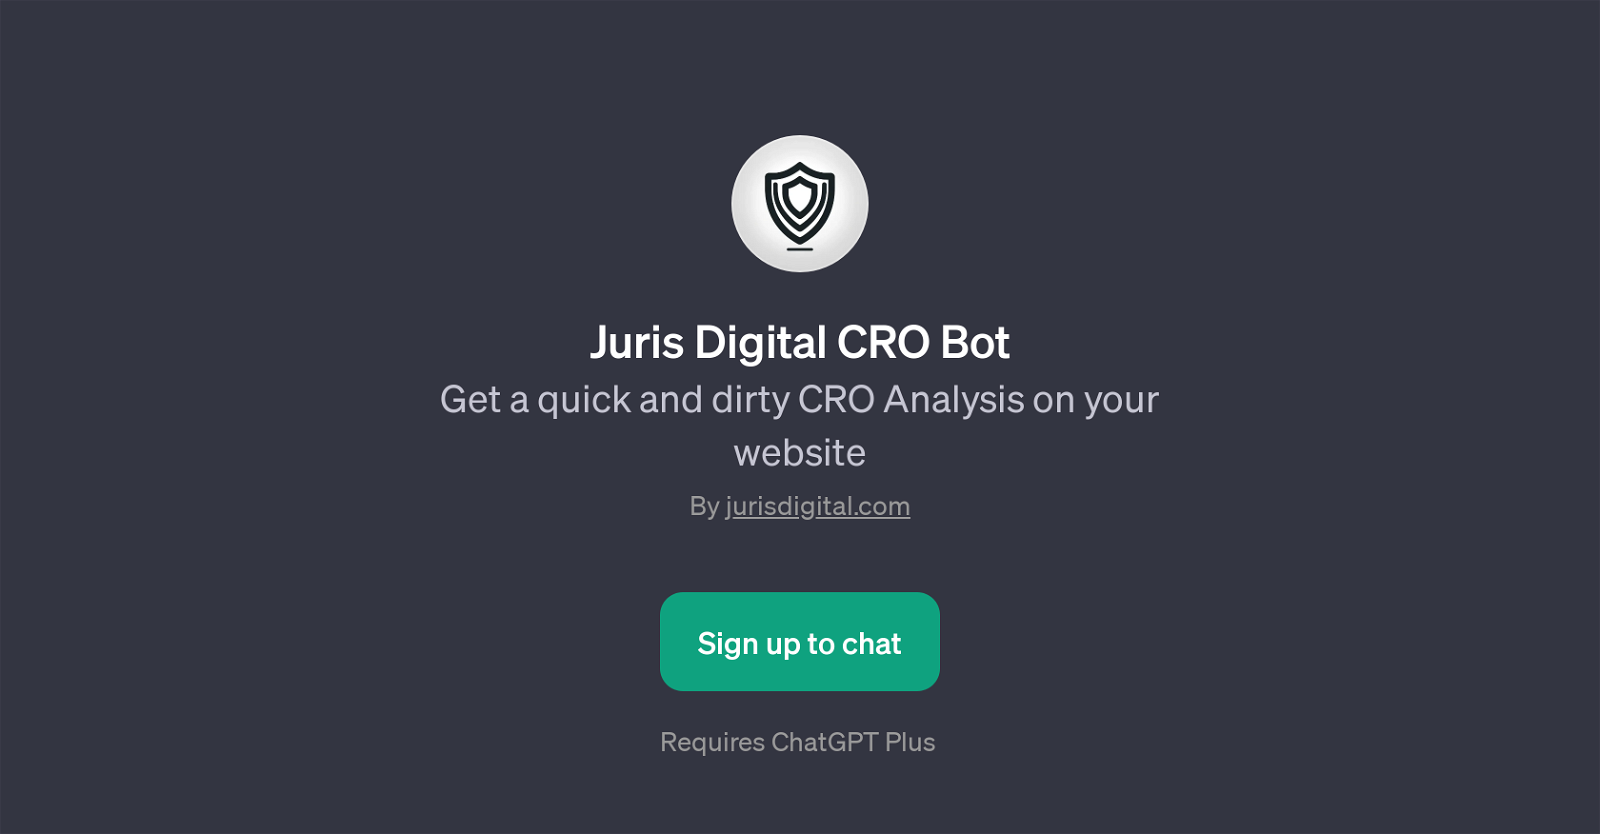 Juris Digital CRO Bot website